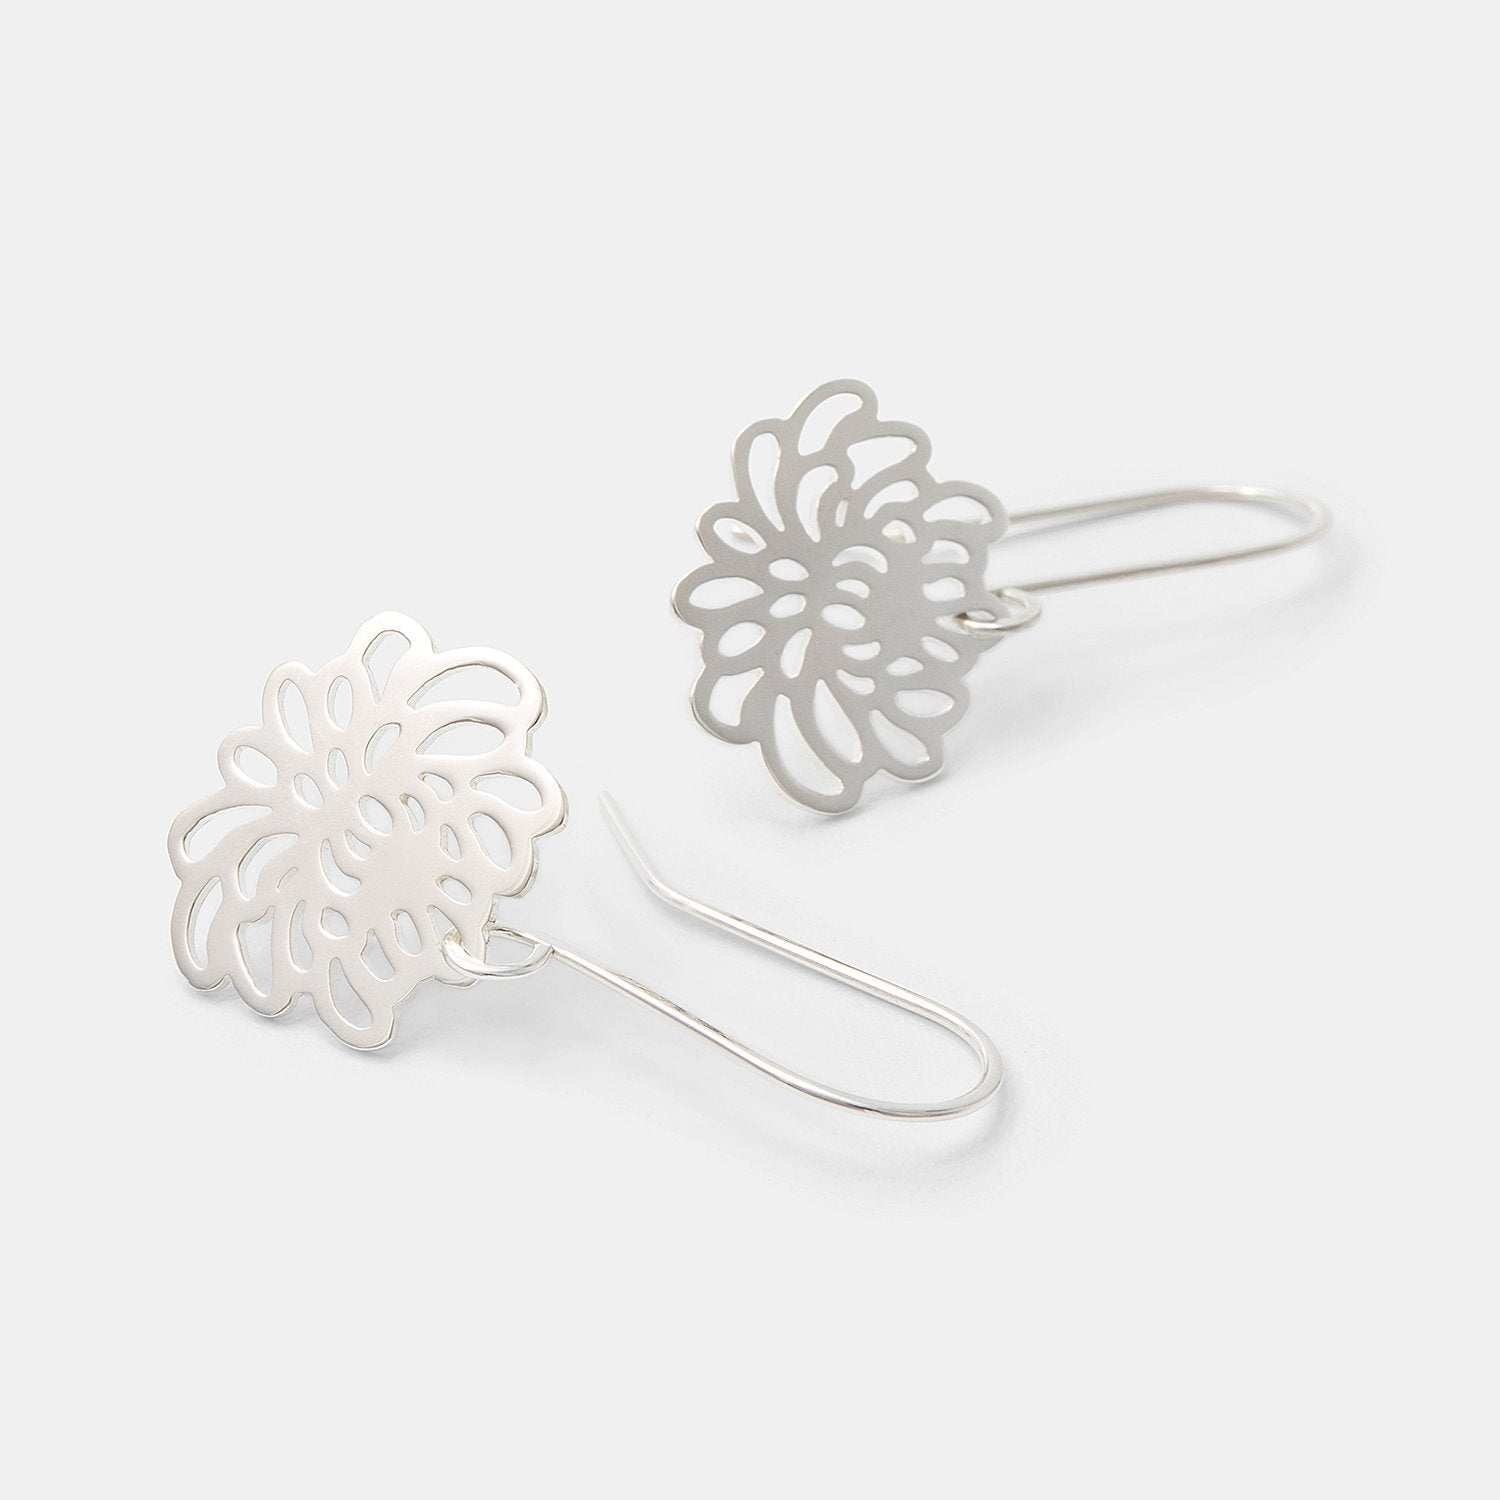 Chrysanthemum drop earrings - Simone Walsh Jewellery Australia